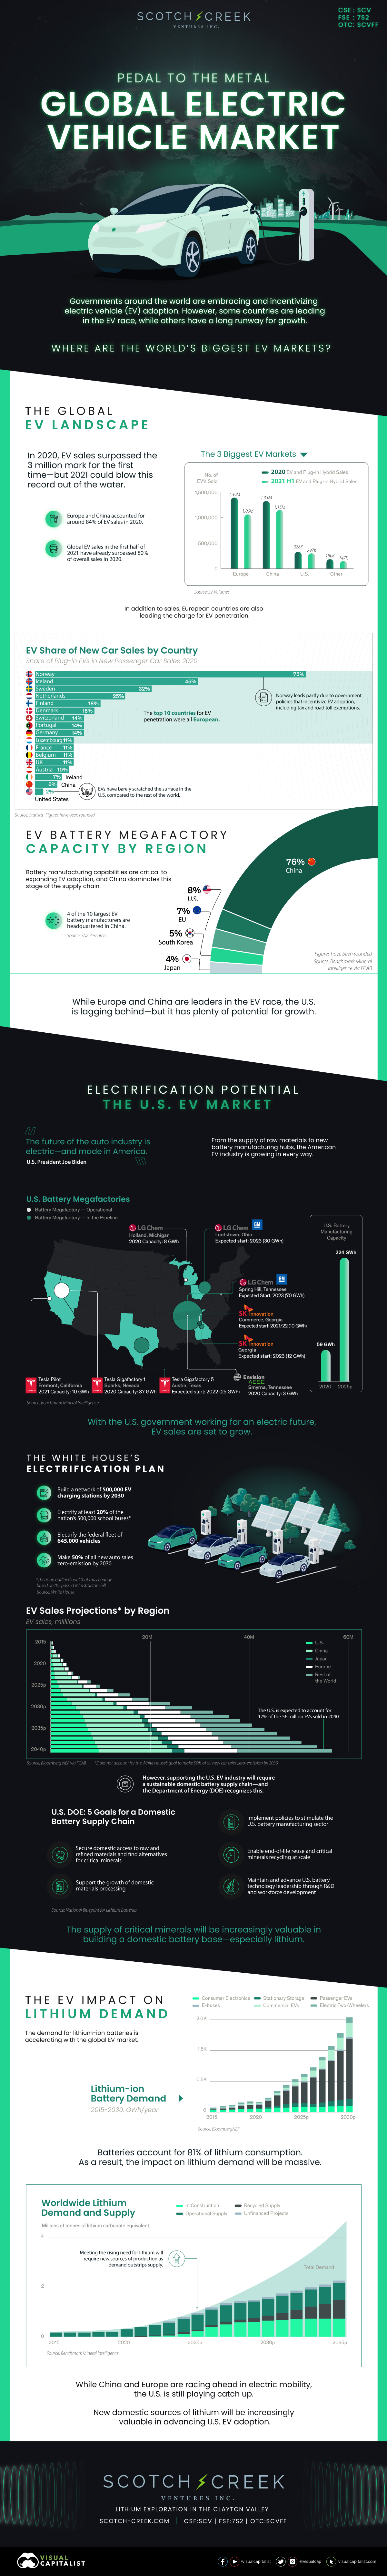 Electric vehicle market